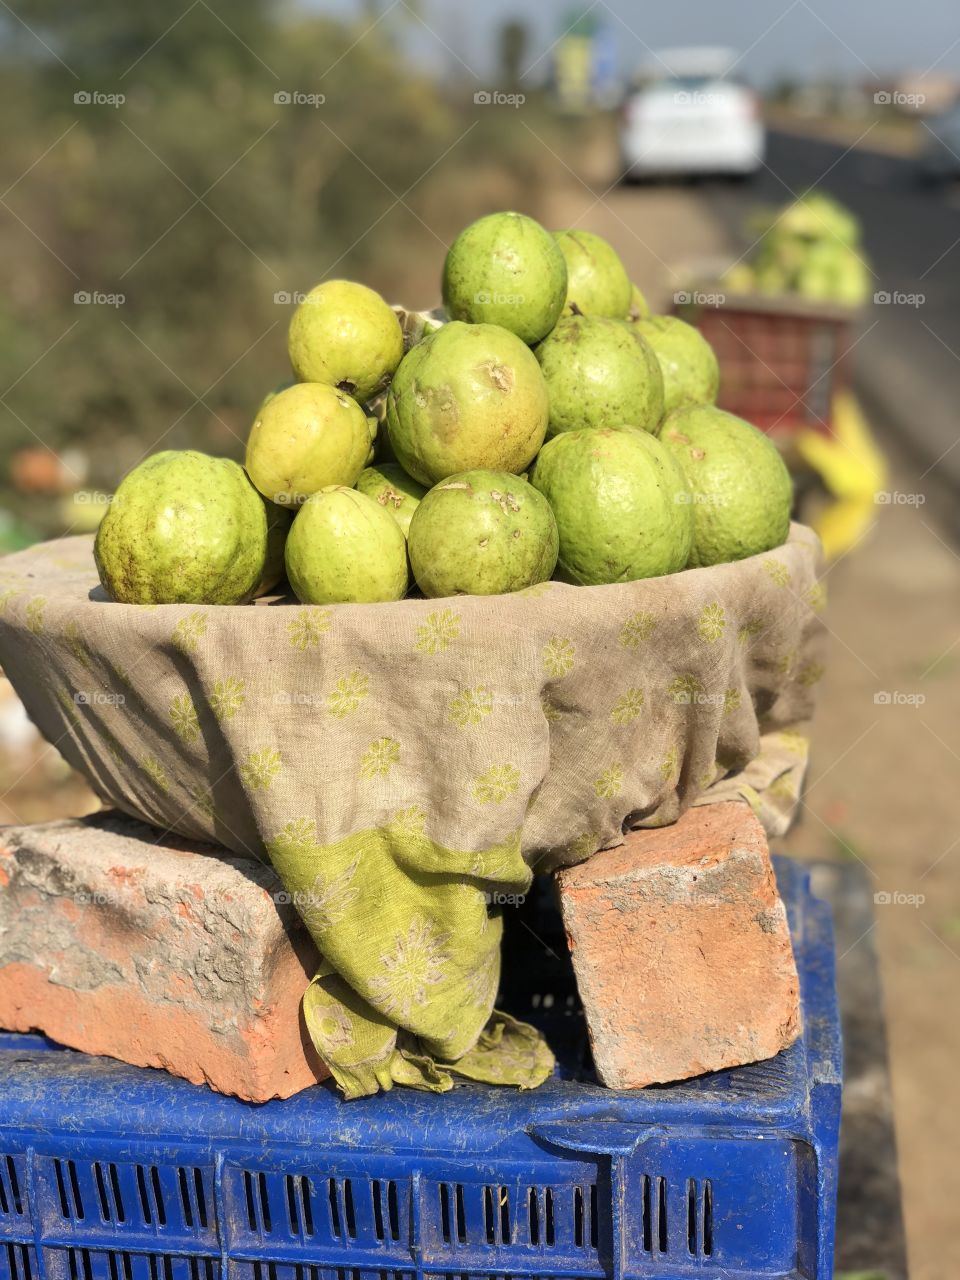 Buckets of Guava